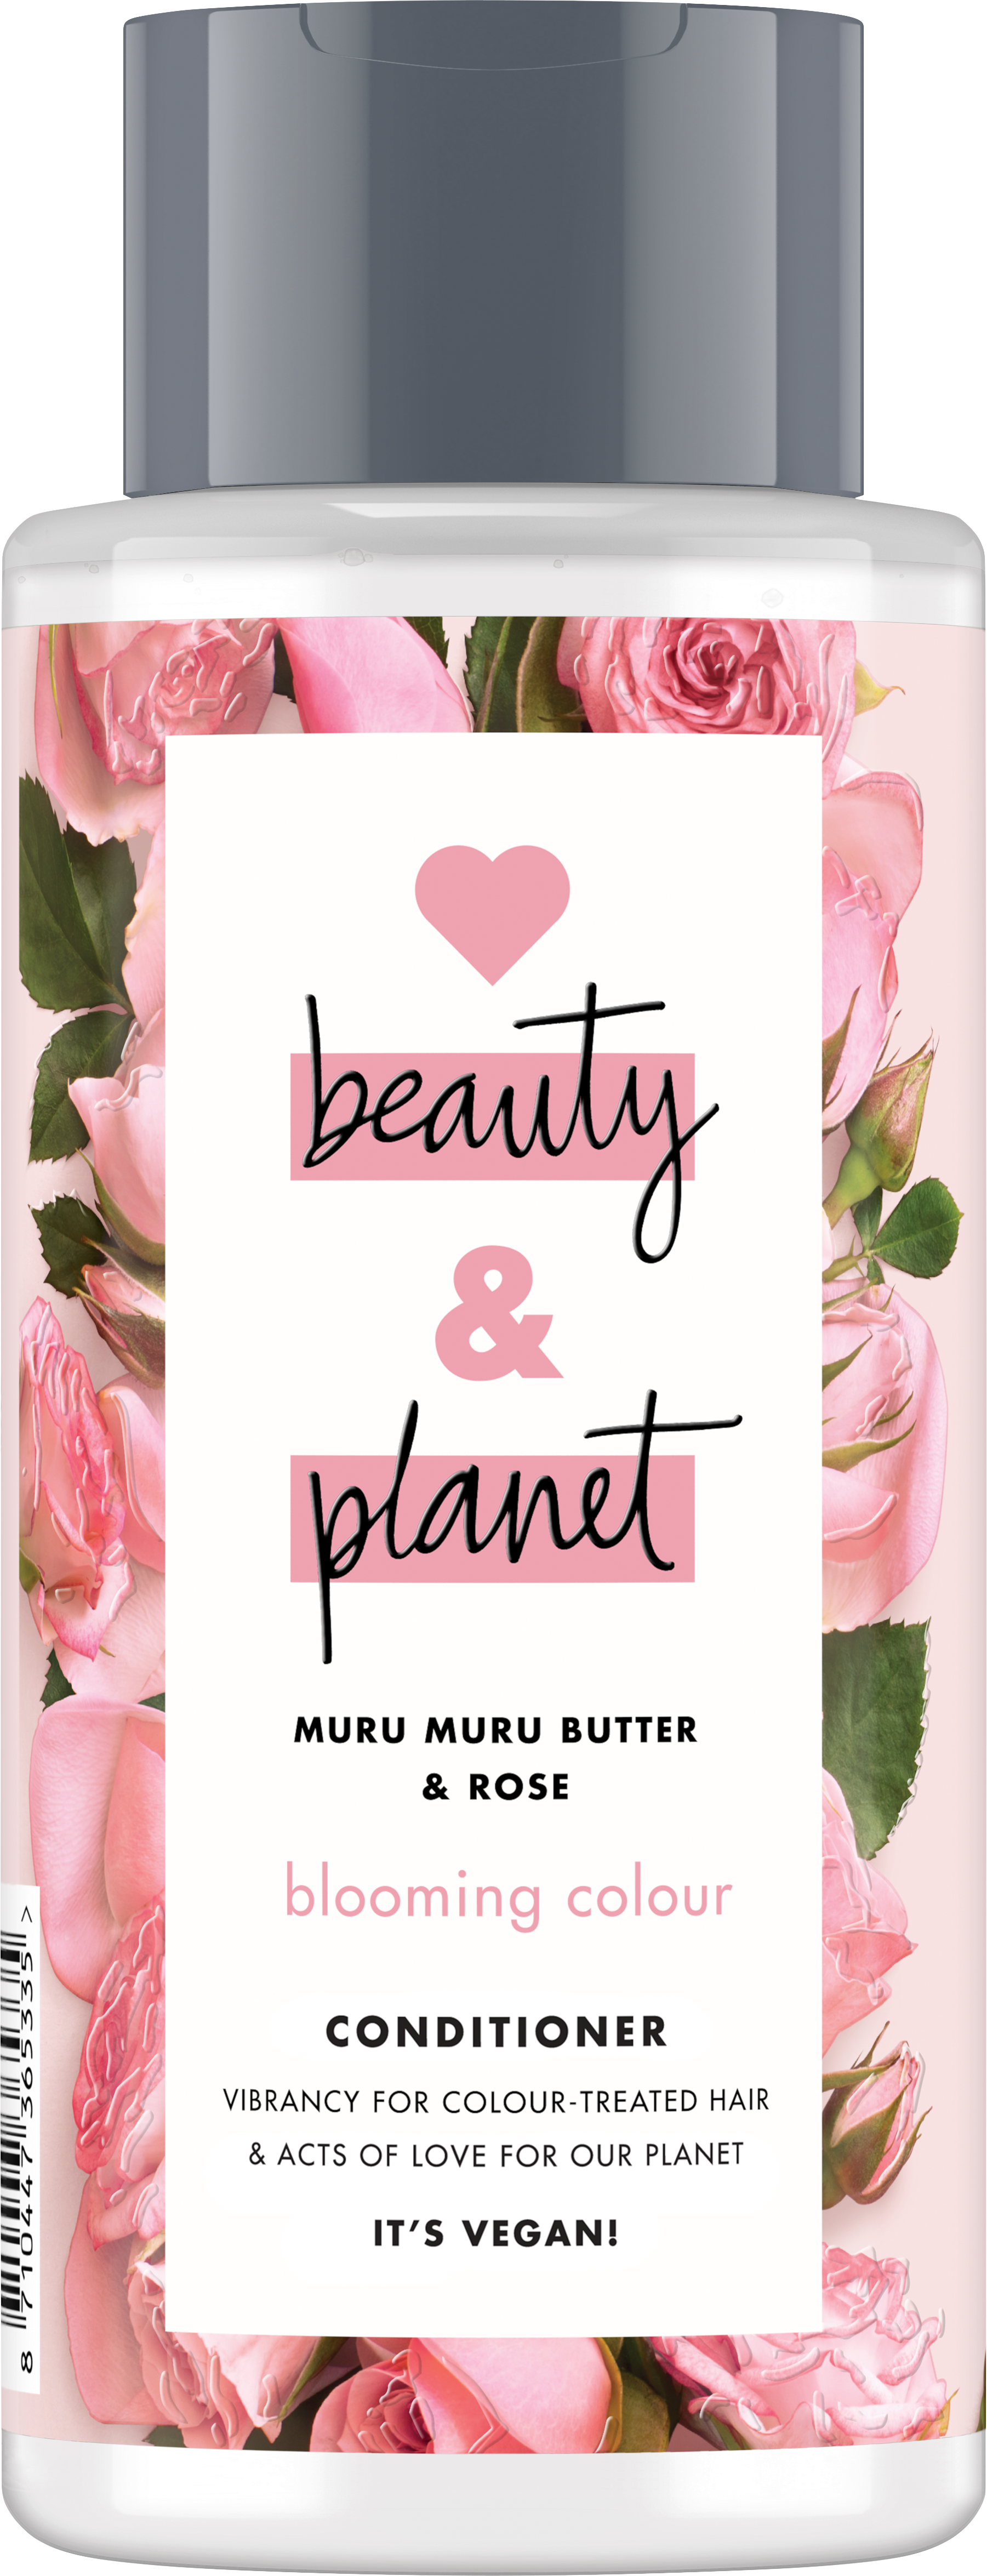 Image of LOVE beauty AND planet Muru Muru Butter & Rose Blooming Colour Conditioner Murumuru Butter & Rose - 400ml